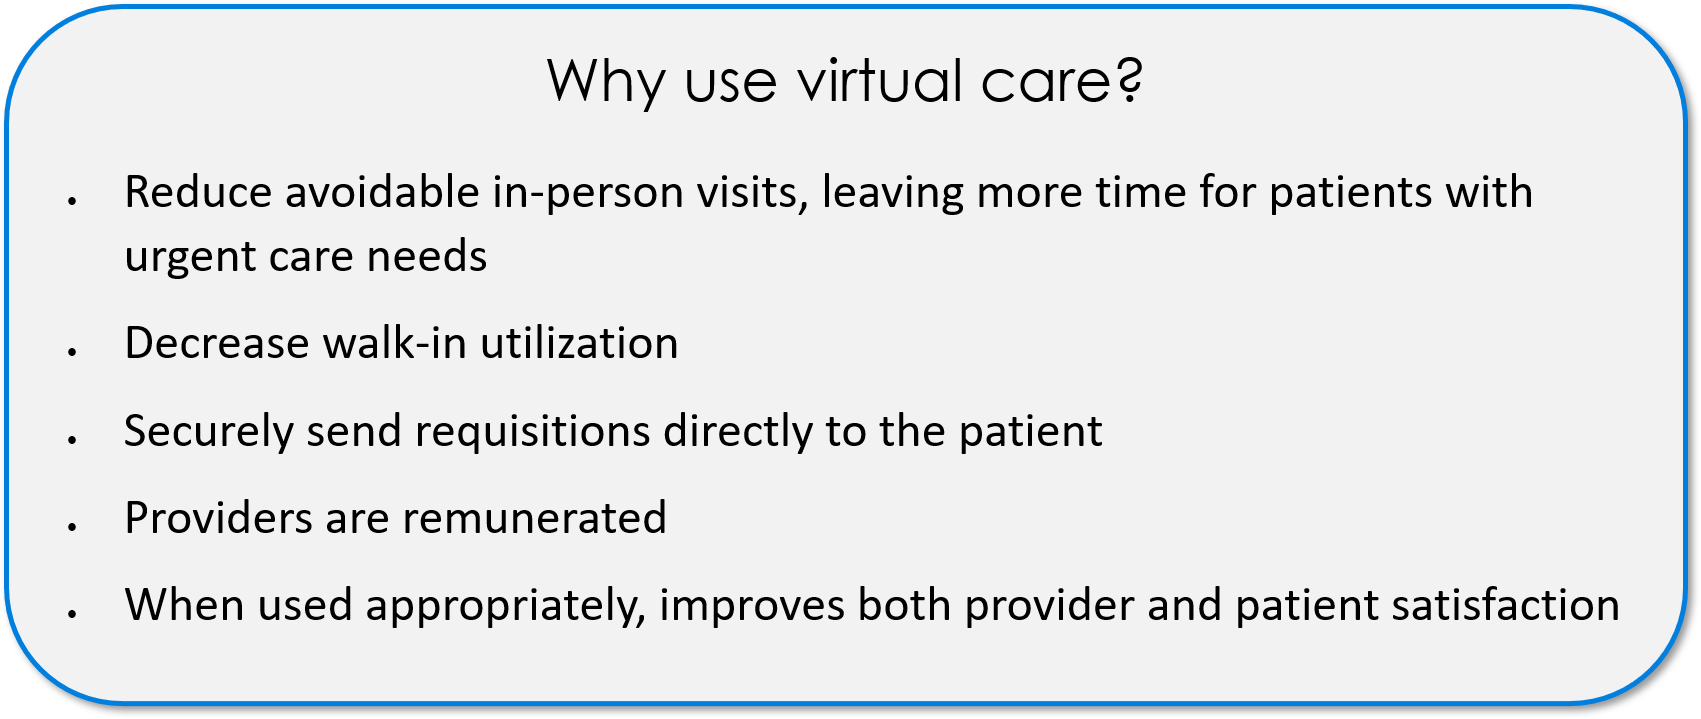 Why use virtual care? 